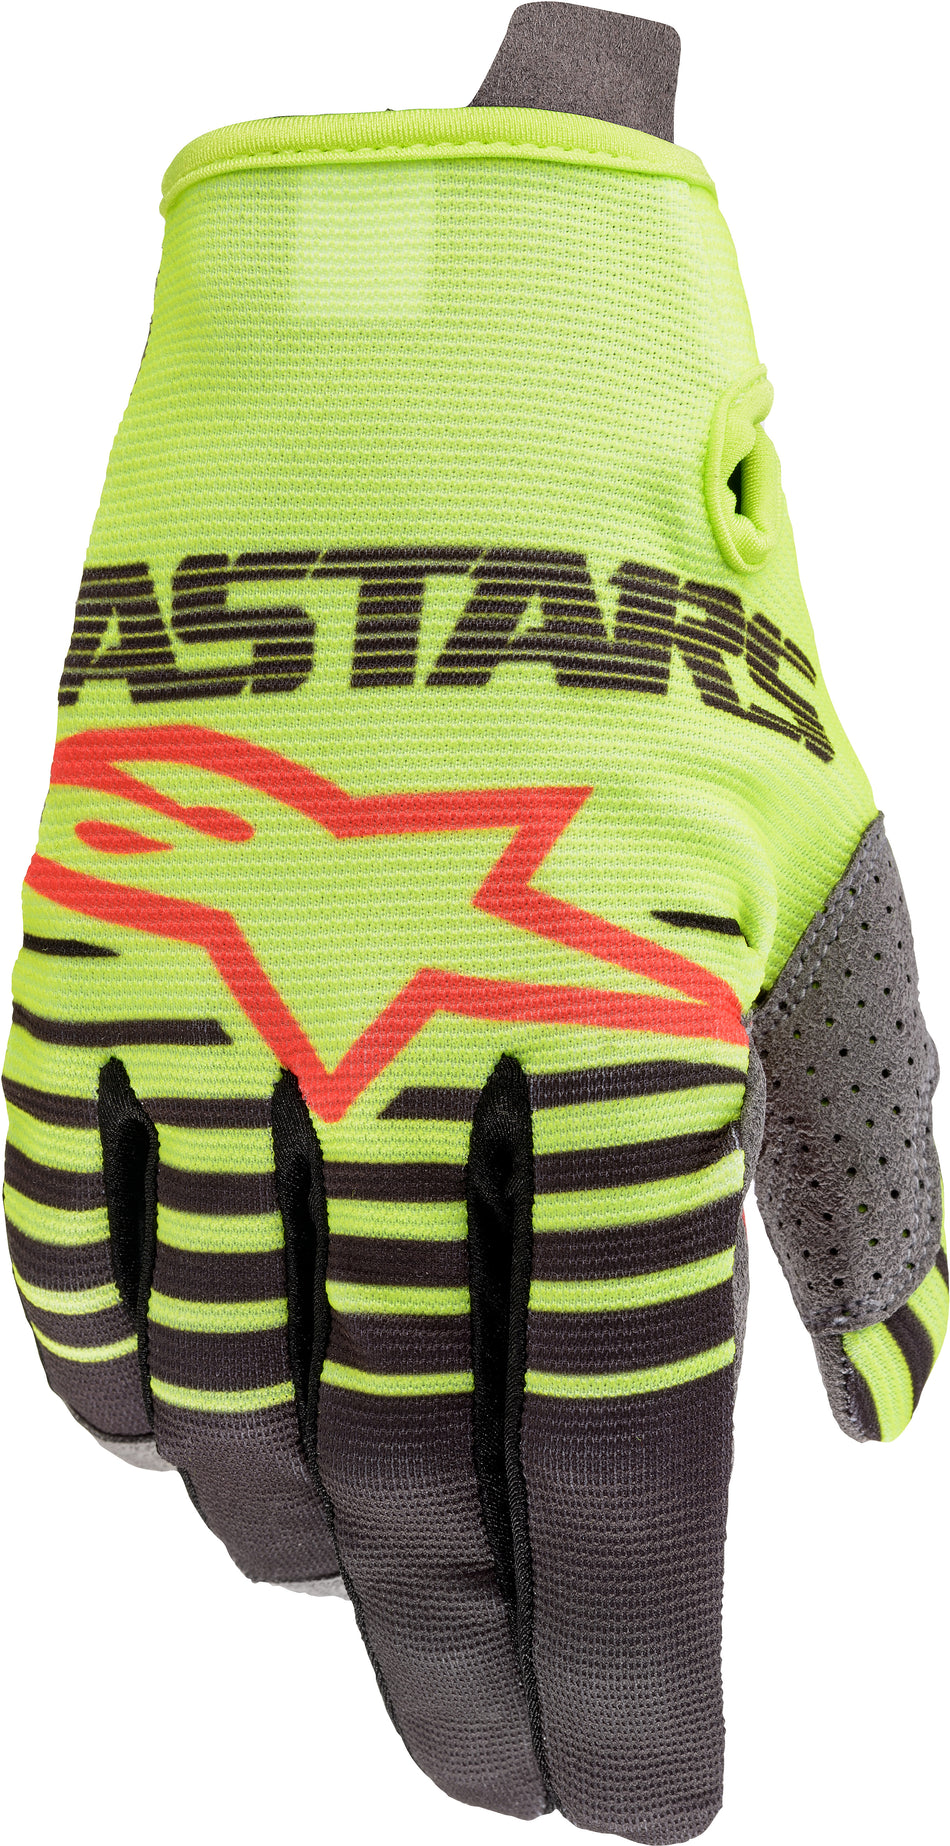 ALPINESTARS Youth Radar Gloves Yellow/Anthracite Sm 3541820-559-S